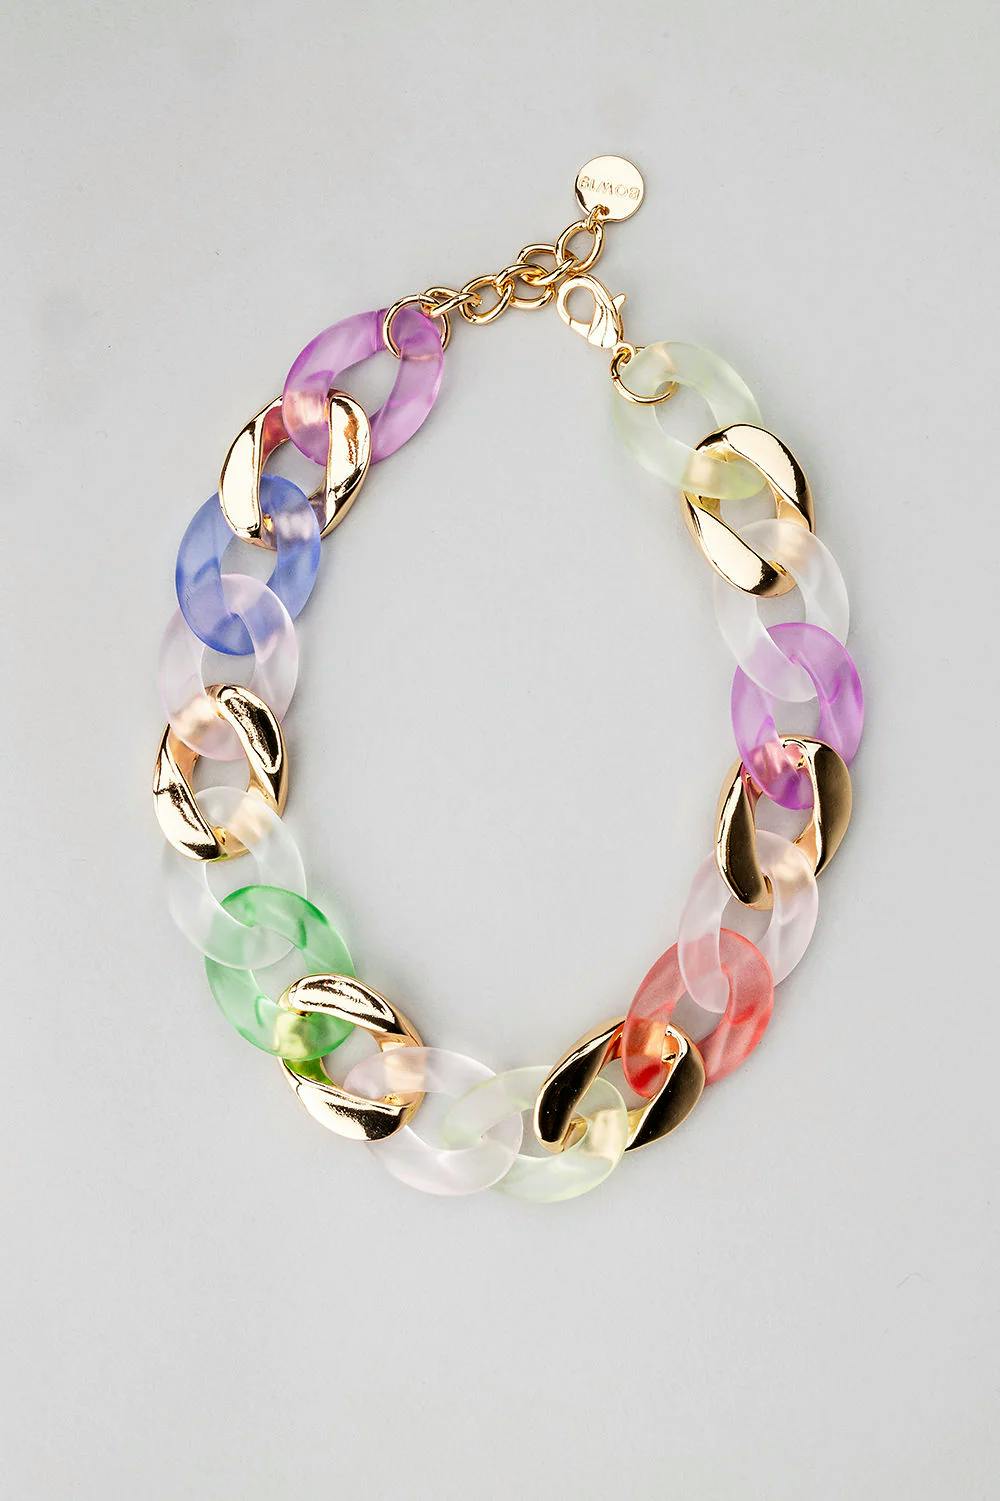 Necklace Big chain, multi color - BOW19